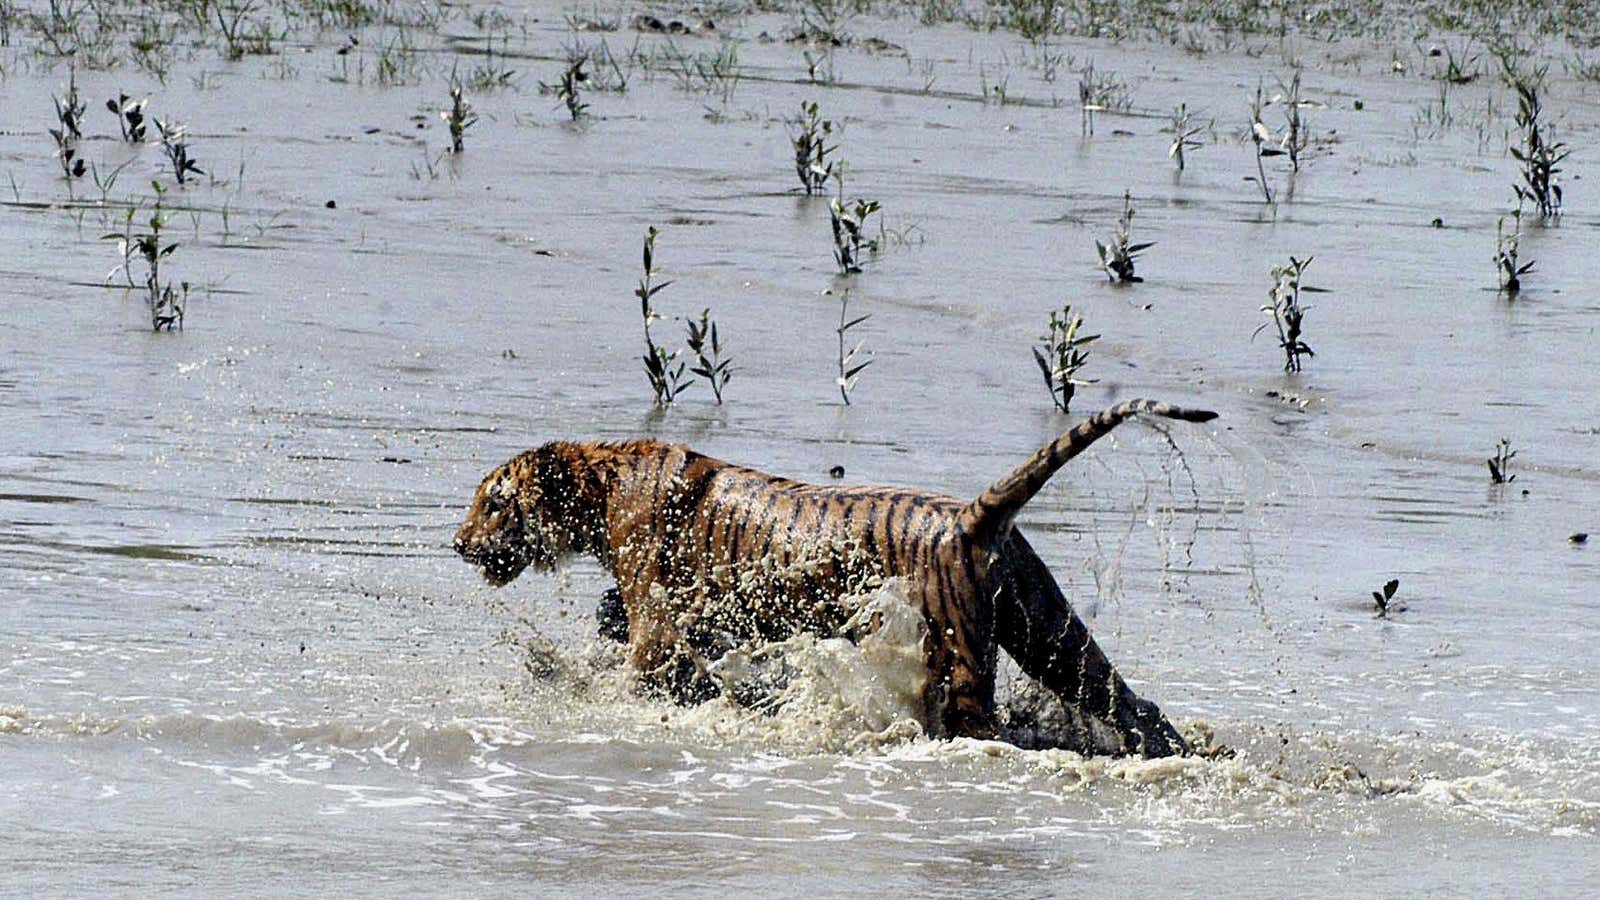 A tiger walks in the low tide between Sundarbans islands.